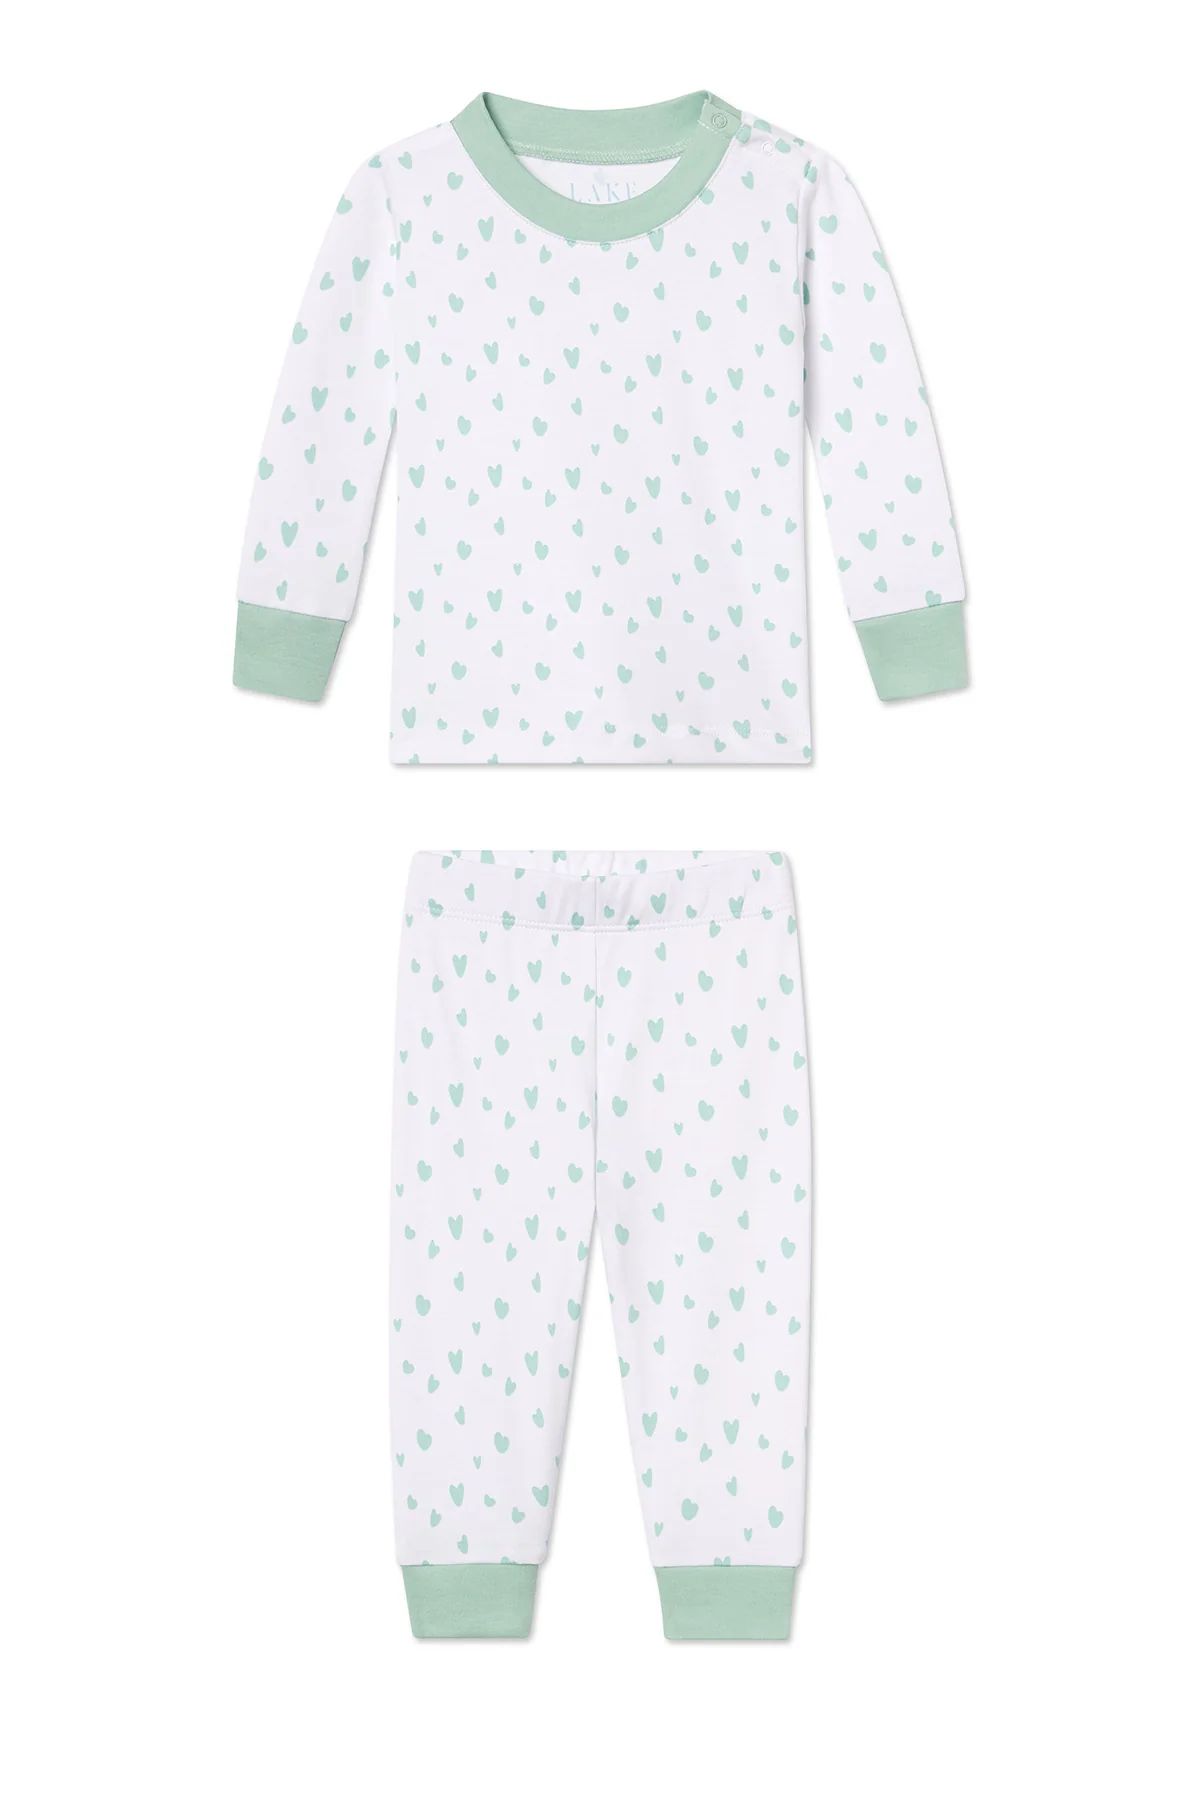 Baby Long-Long Set in Parisian Green Mini Heart | Lake Pajamas